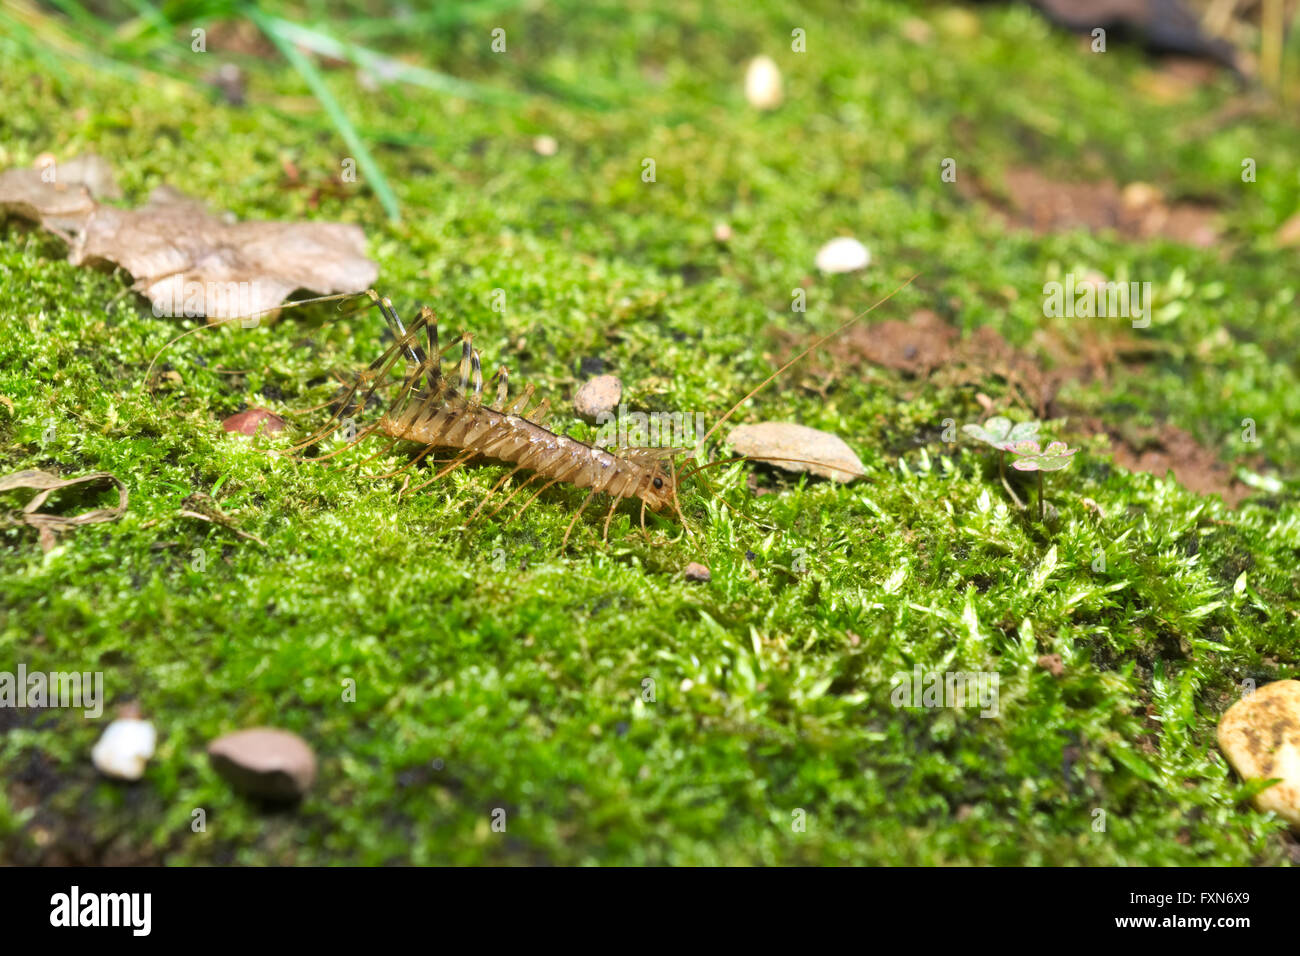 Italian house centipede with long legs (Scutigera coleoptrata) walking on green moss Stock Photo